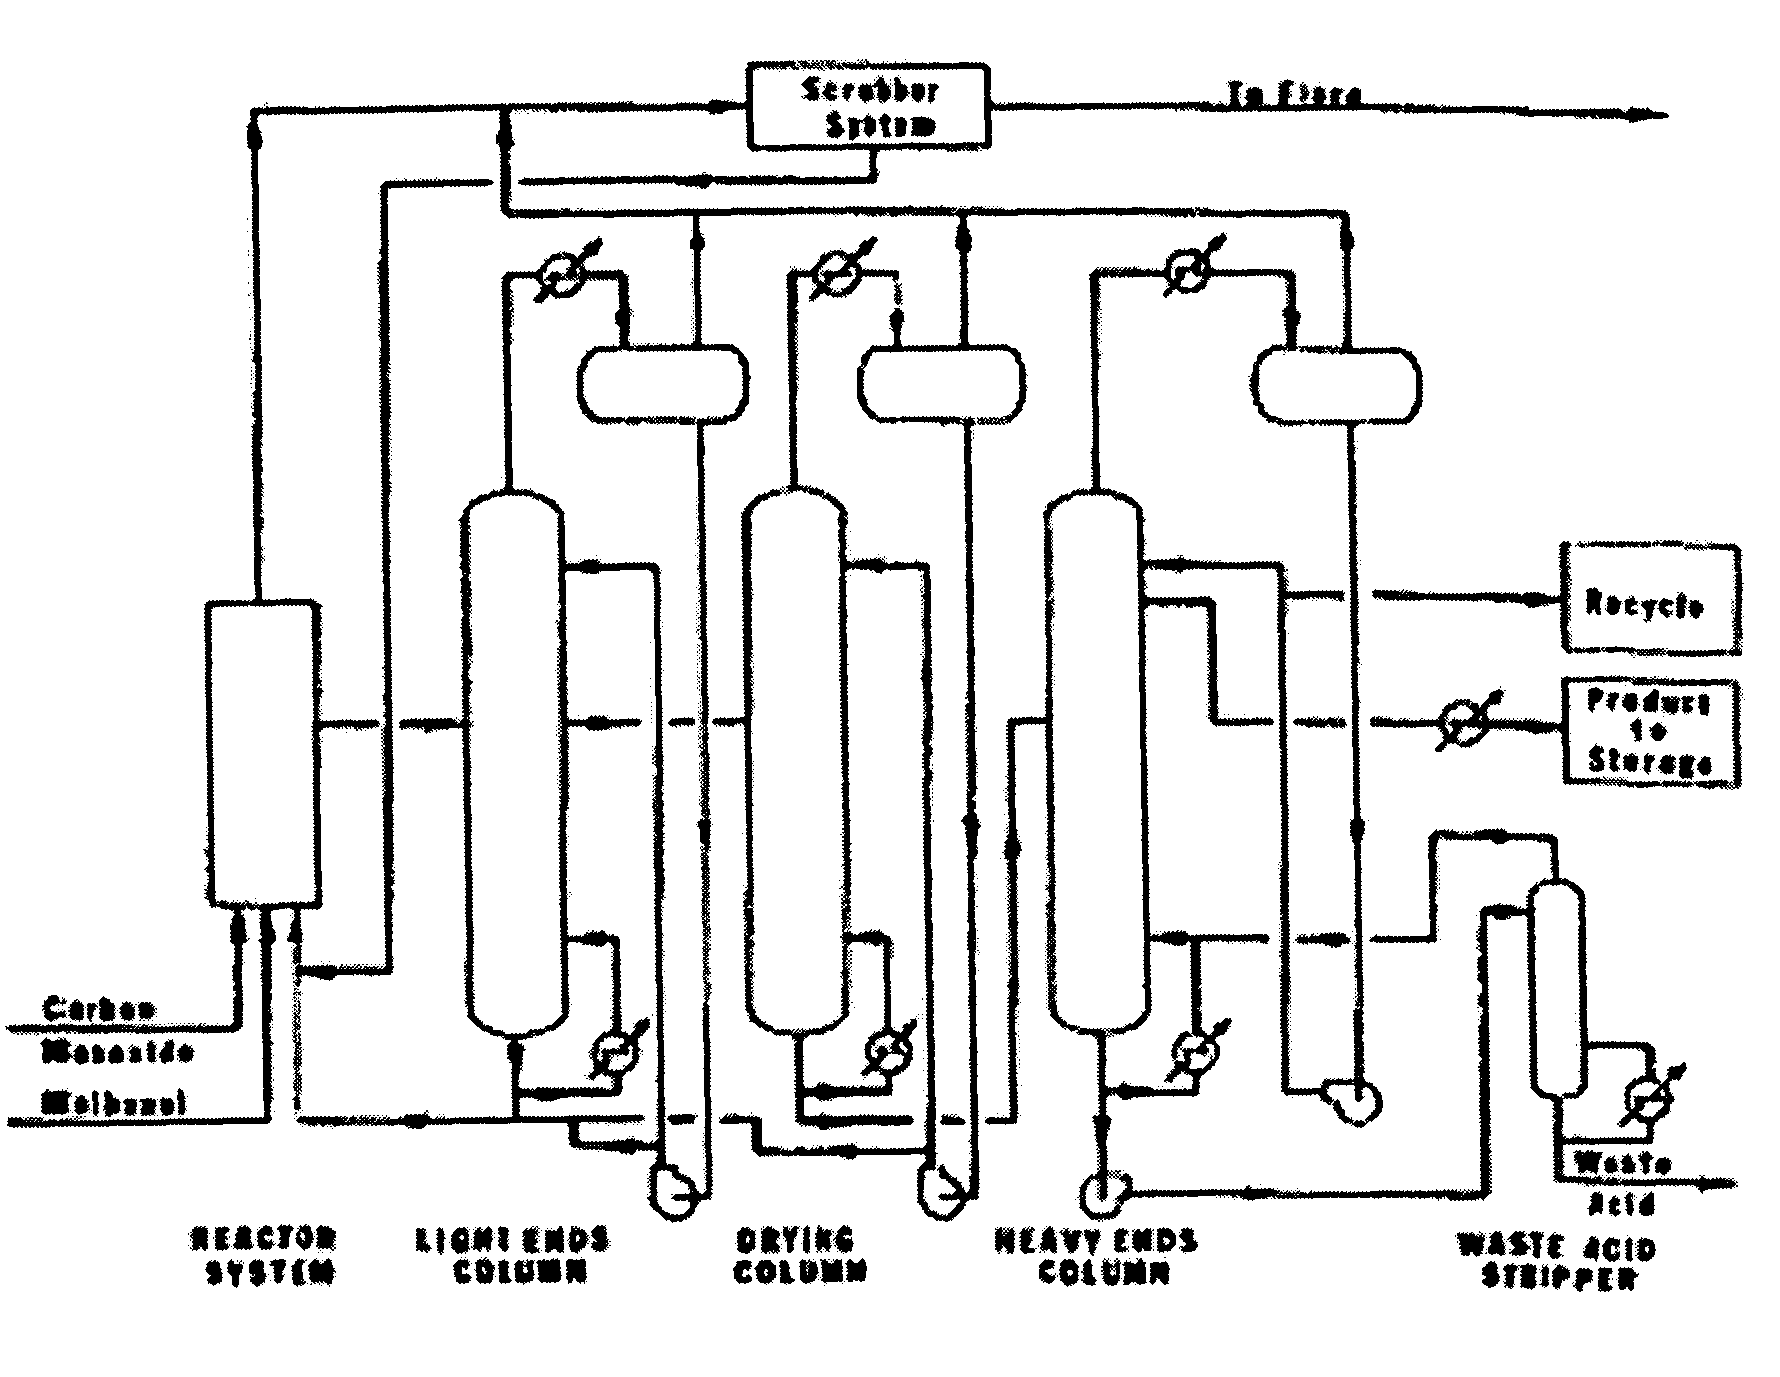 Method of controlling acetic acid process